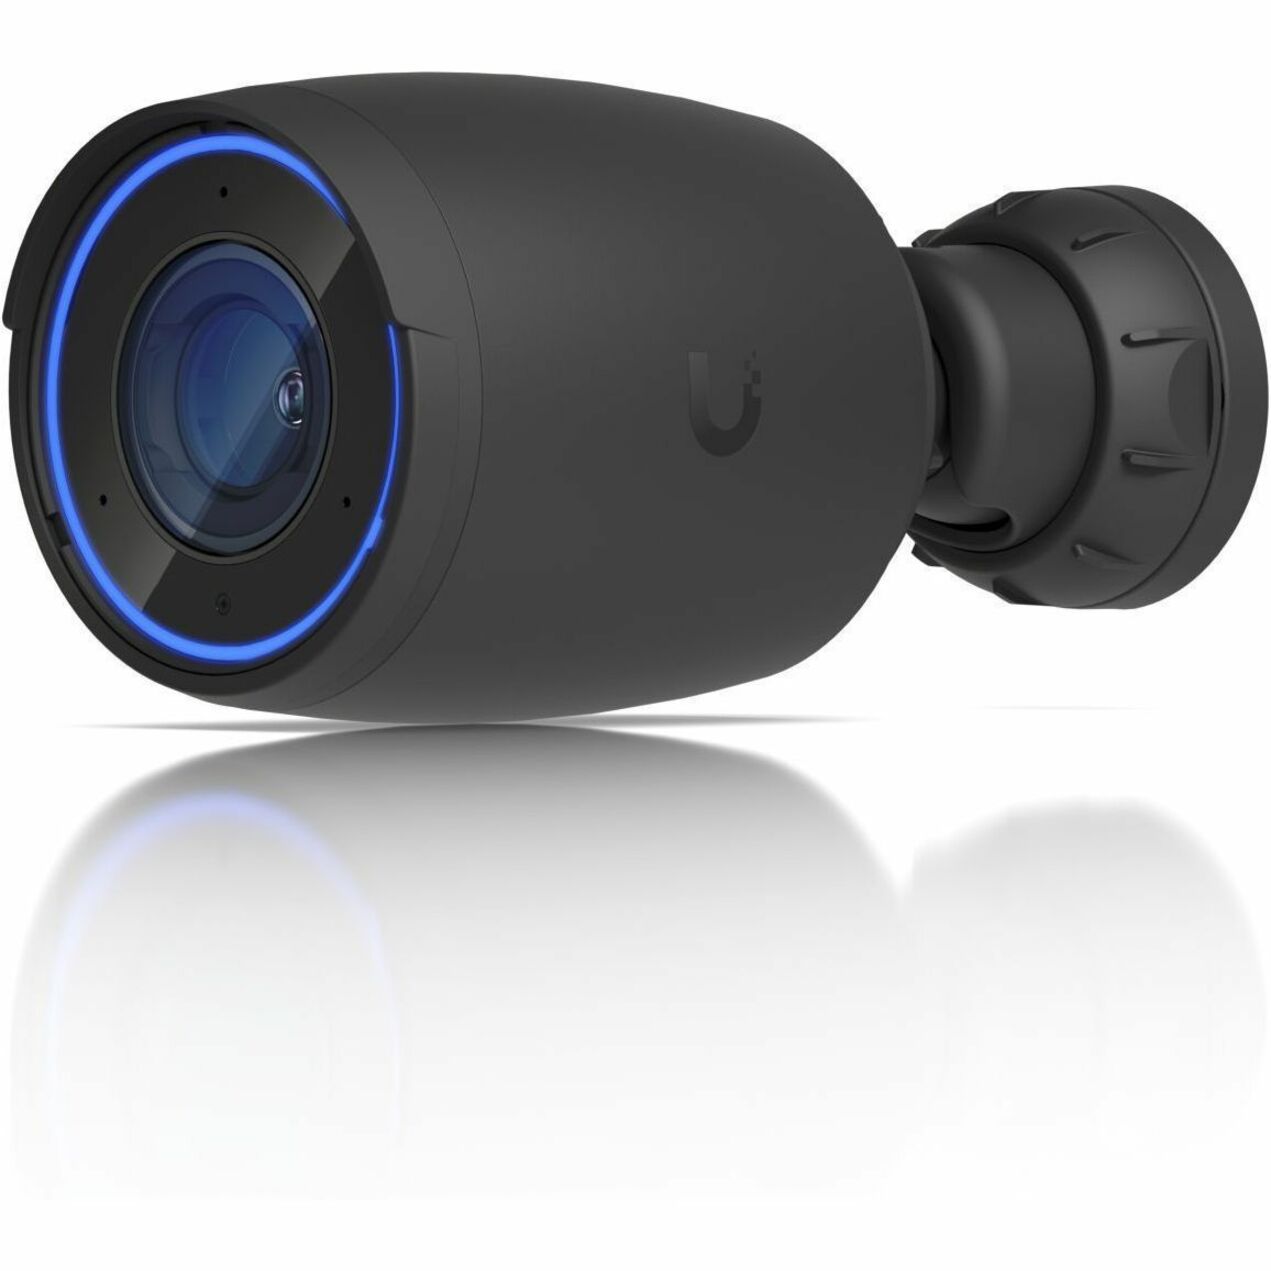 Ubiquiti UVCAIPRO Professional AI UVC-AI-360 Network Camera, 4K PoE Camera with 3x Optical Zoom and Smart Detection Capability